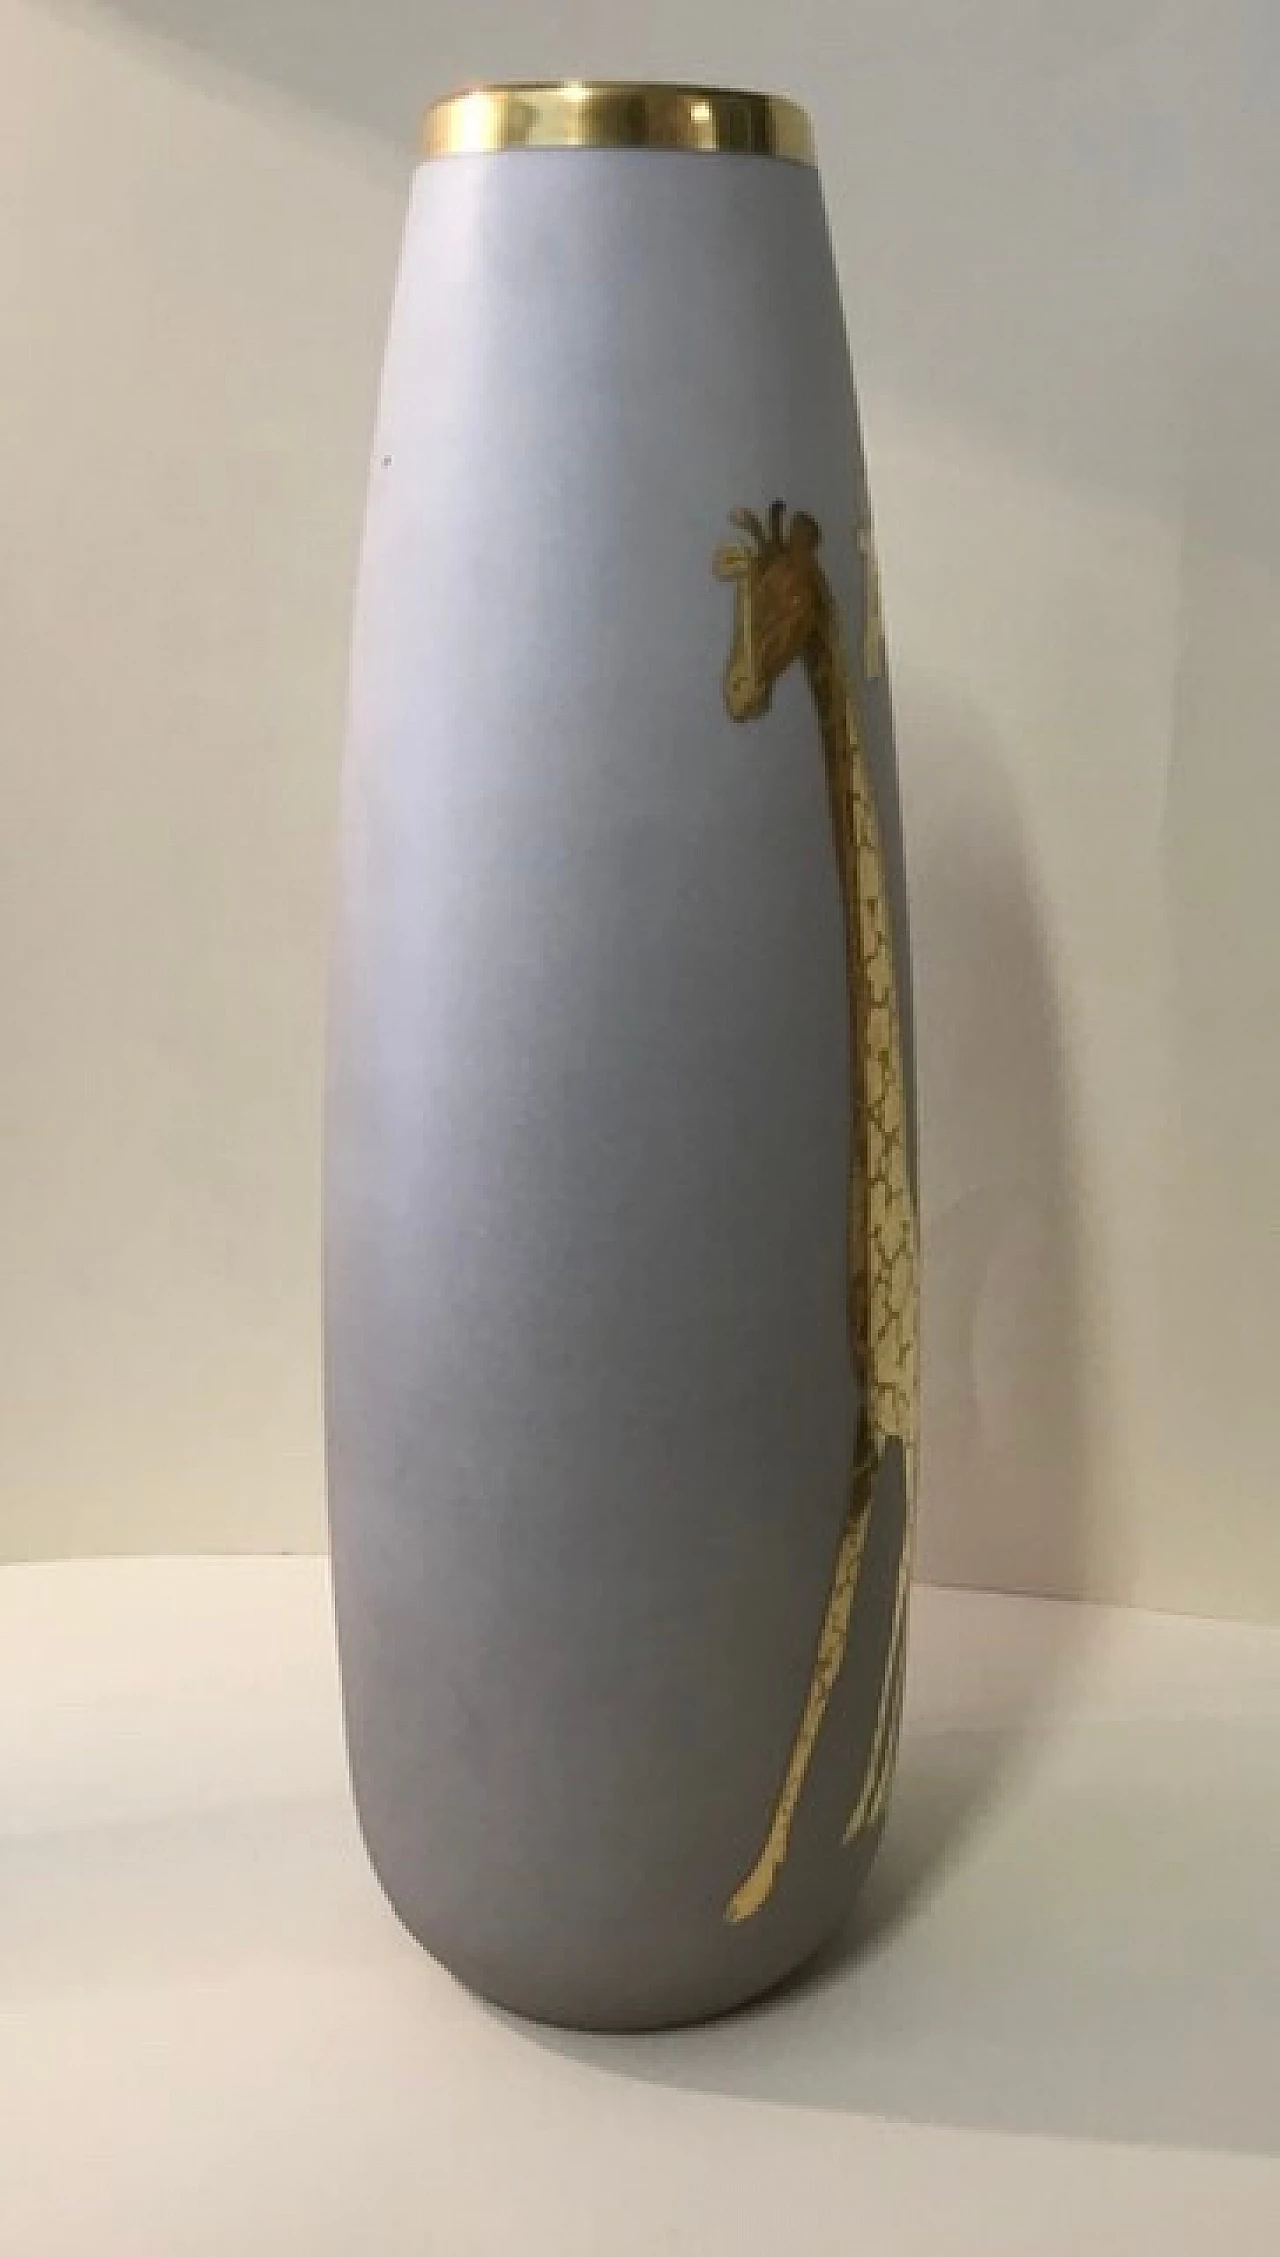 Porcelain vase with giraffes, Finzi 1092527